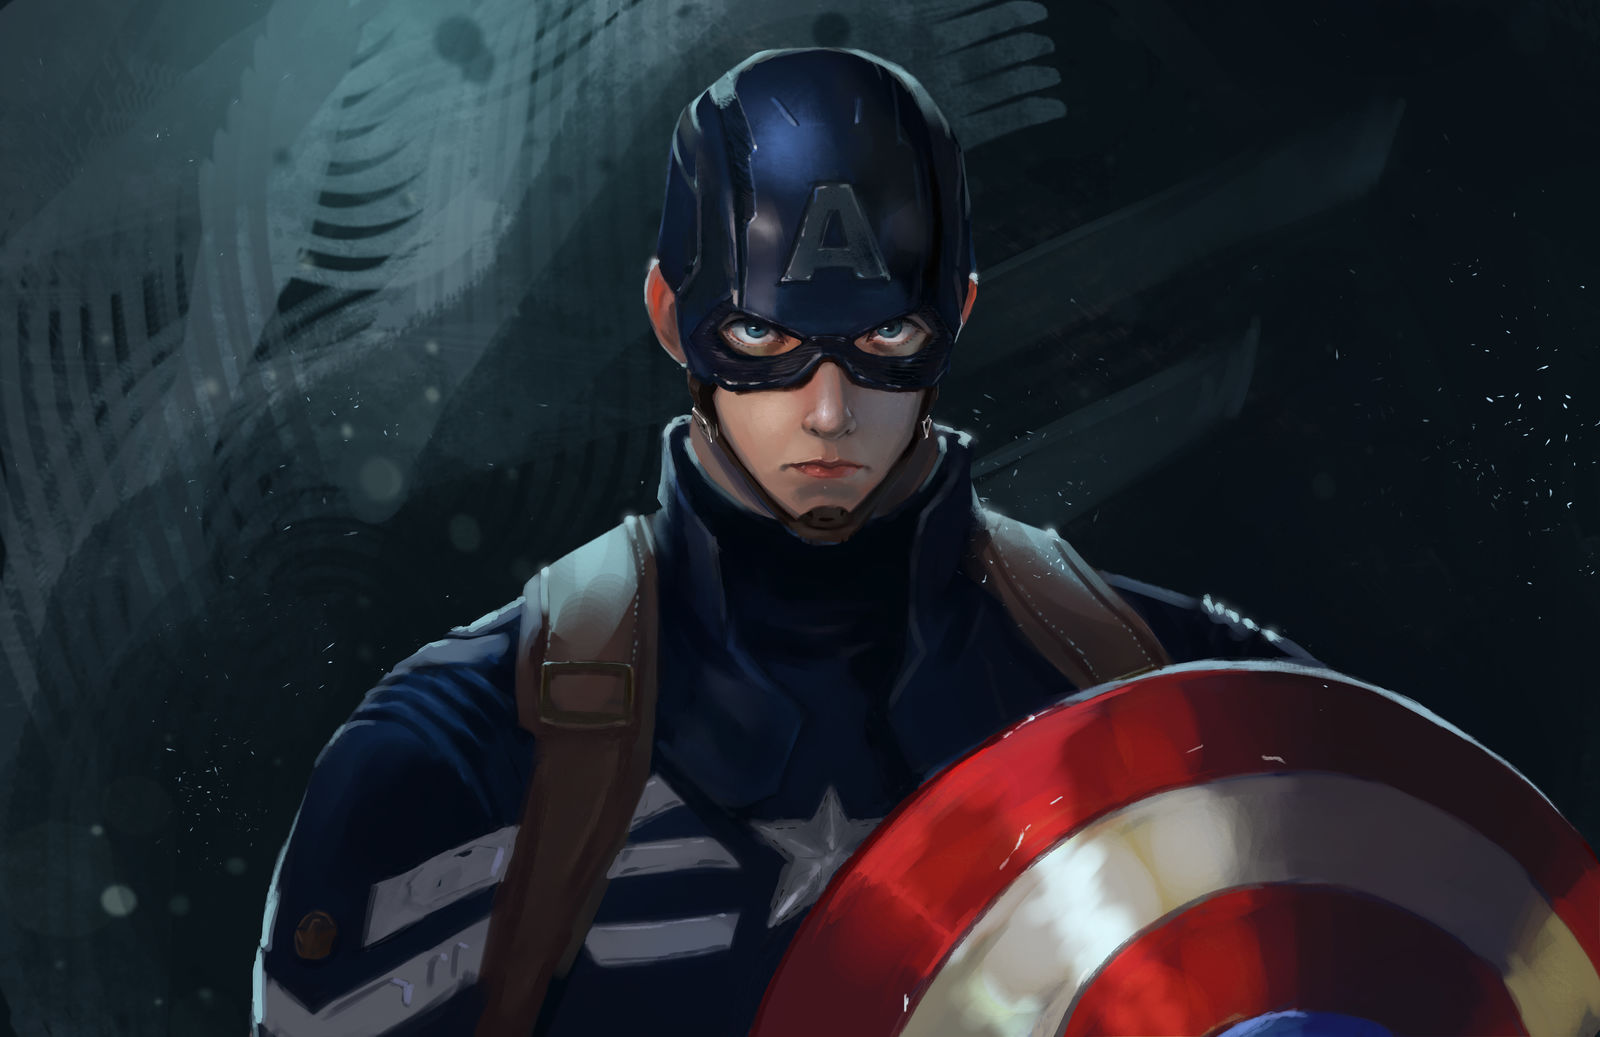 Captain America插画图片壁纸